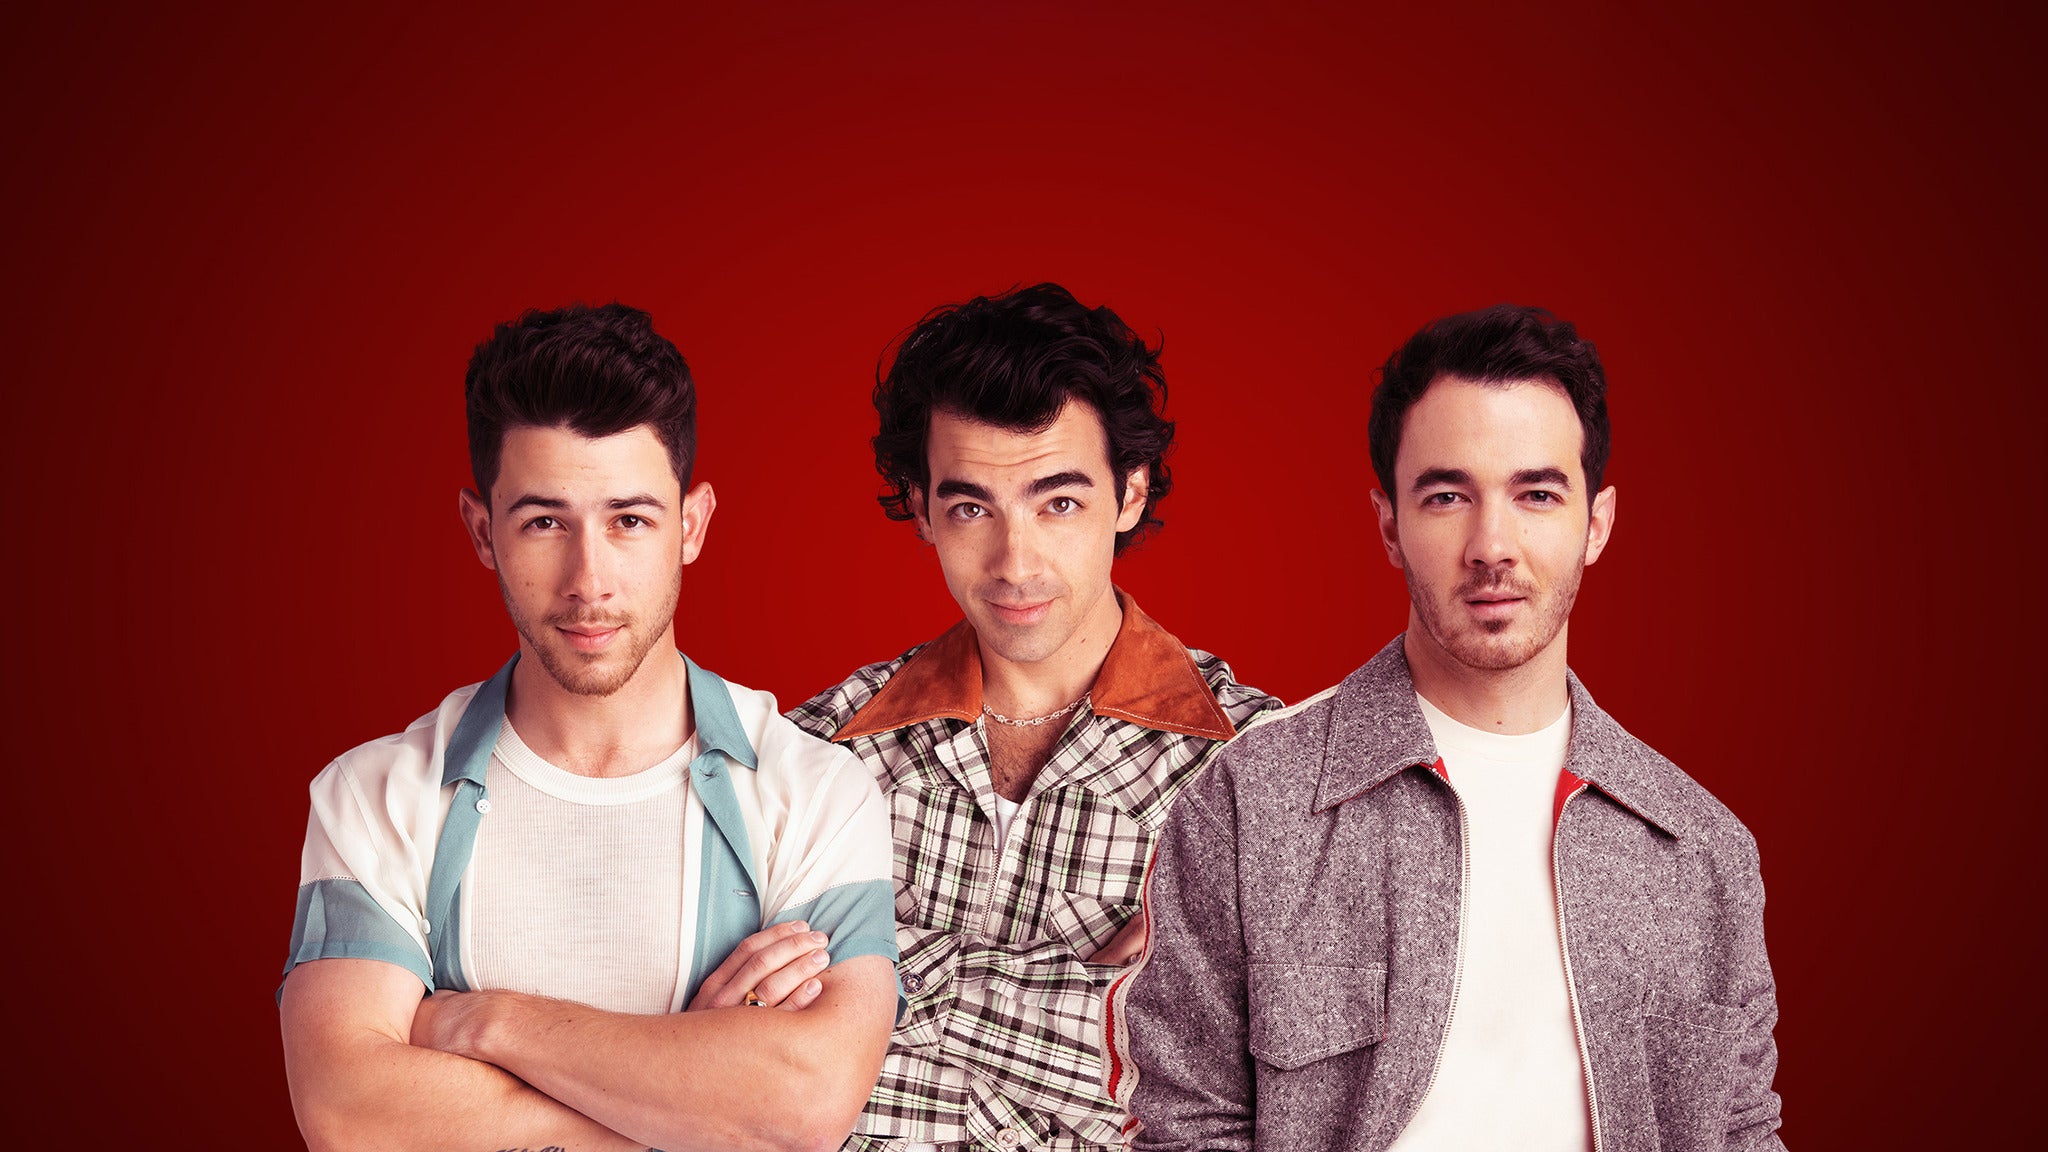 Jonas Brothers - Live in Vegas in Las Vegas promo photo for Citi® Cardmember presale offer code